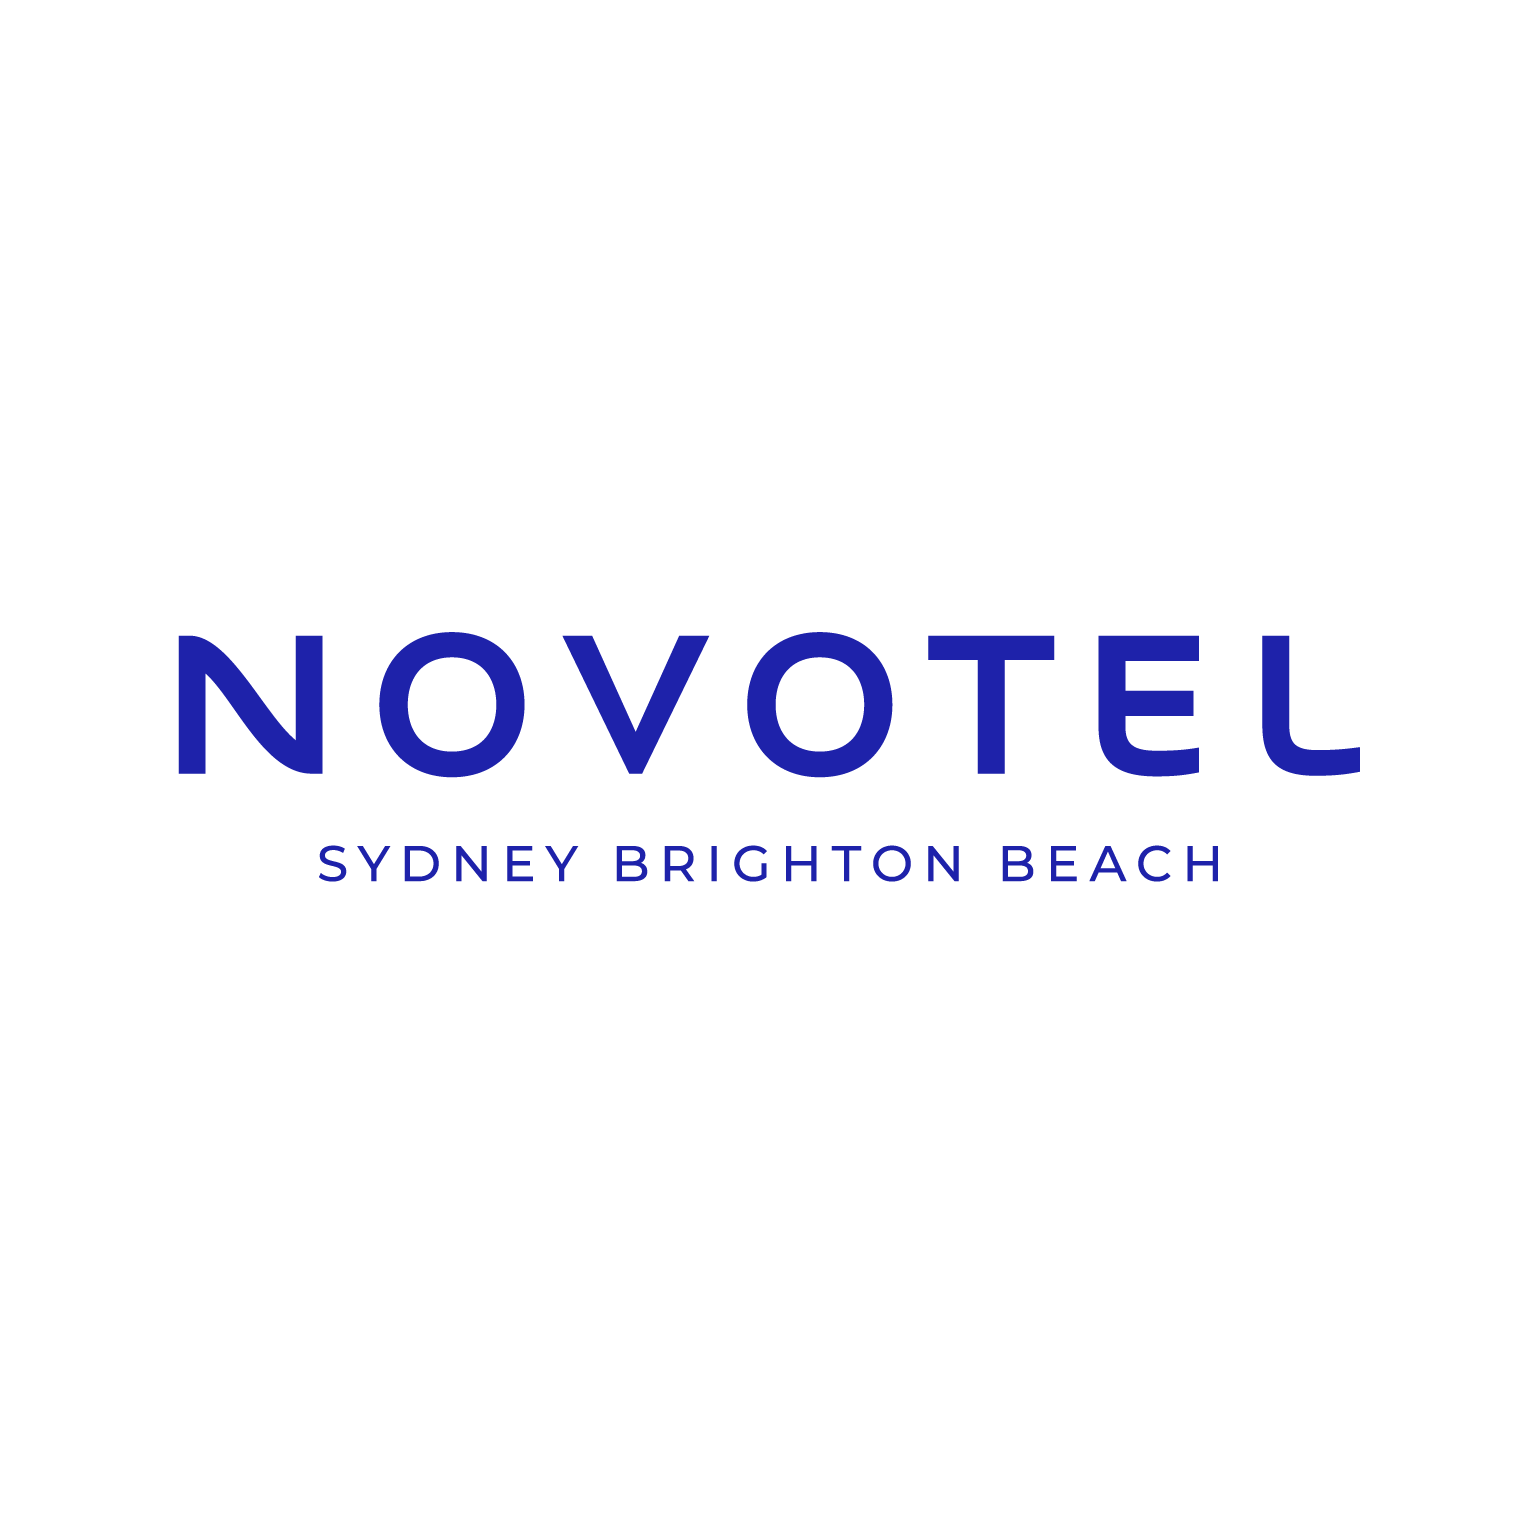 Novotel Sydney Brighton Beach - Sydney, NSW 2216 - (02) 9556 5111 | ShowMeLocal.com